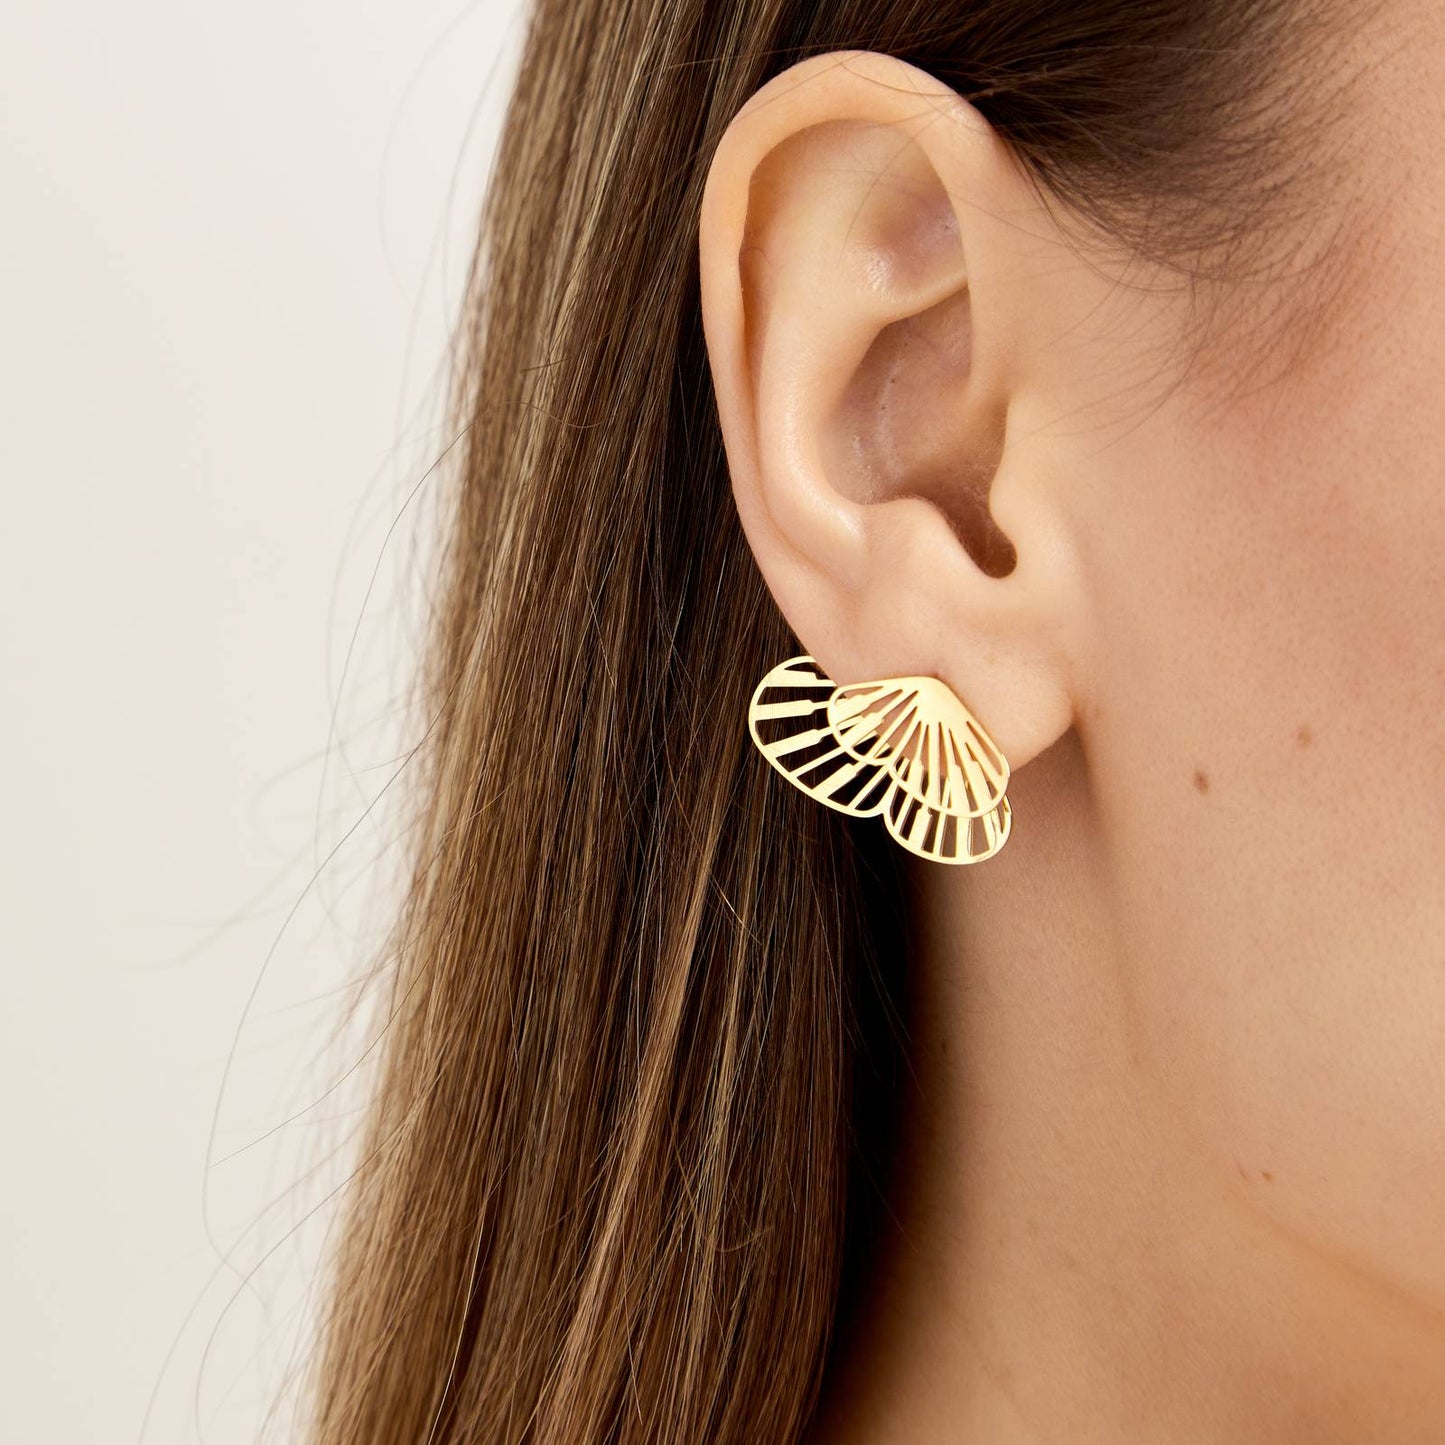 18K gold plated Stainless steel  Butterflies earrings